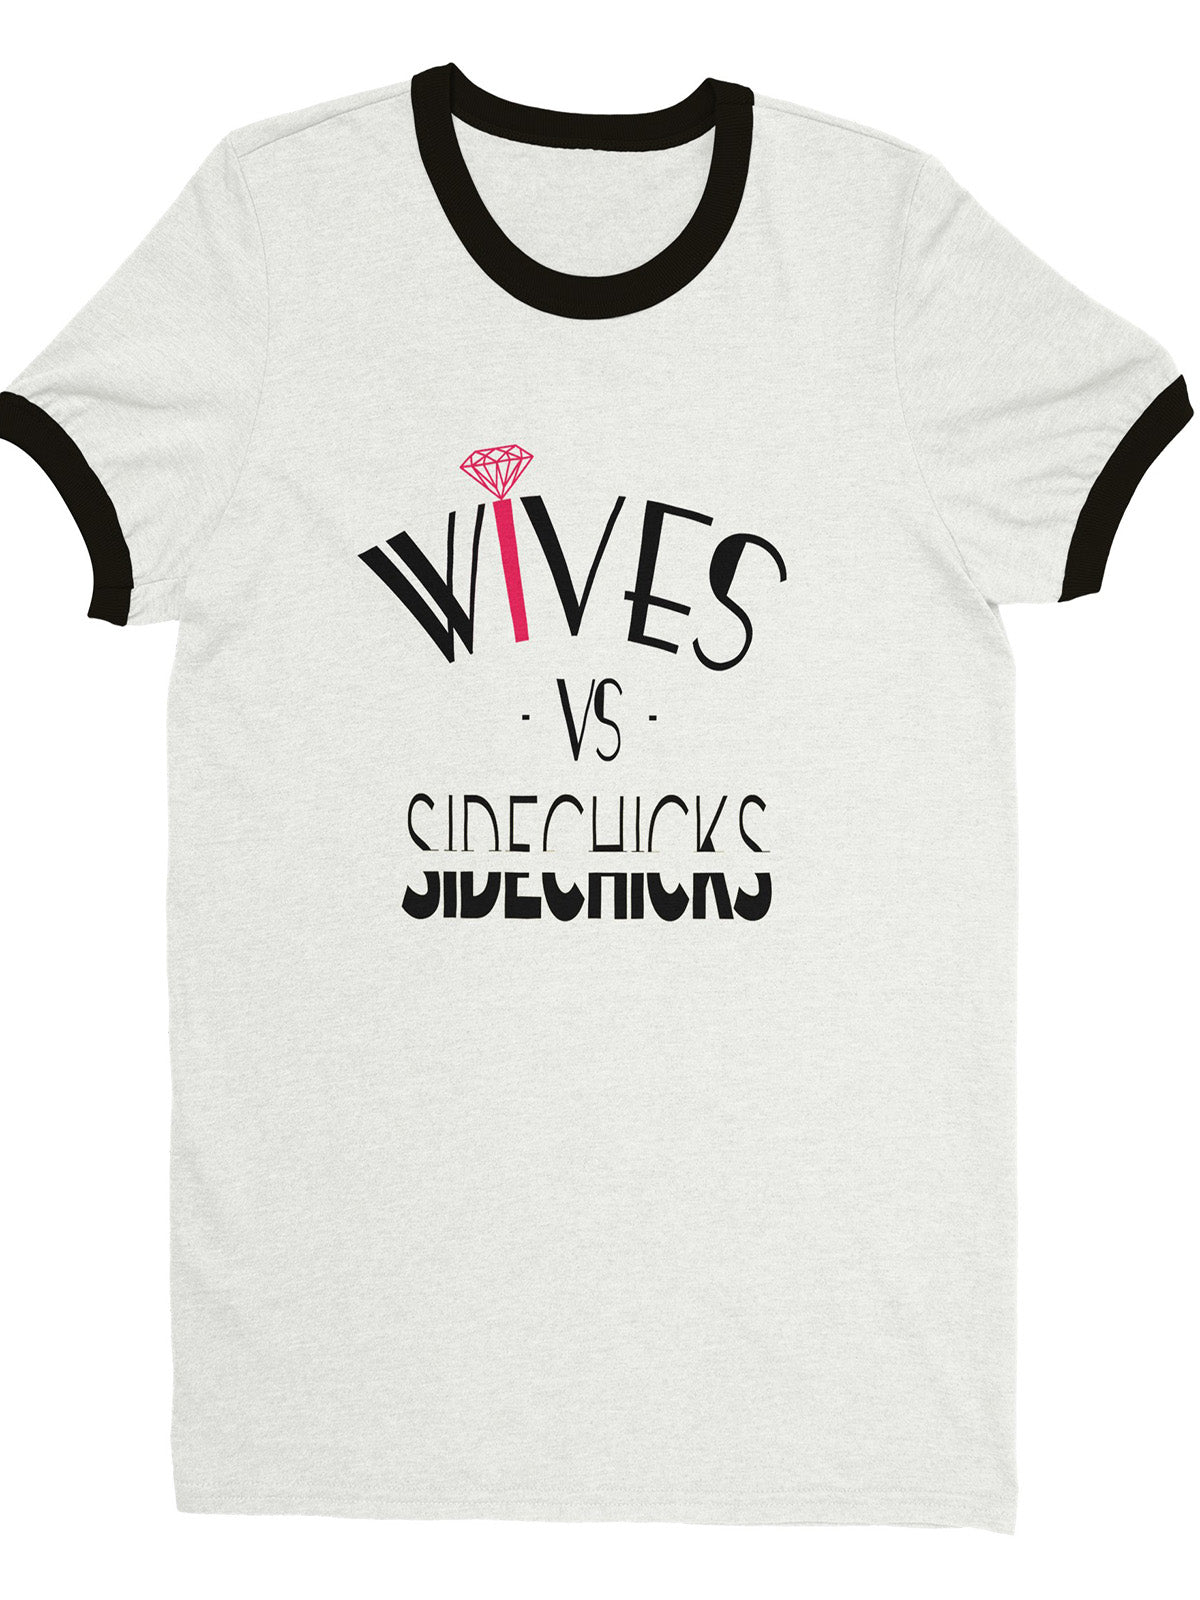 Wives vs Sidechicks - T-Shirt